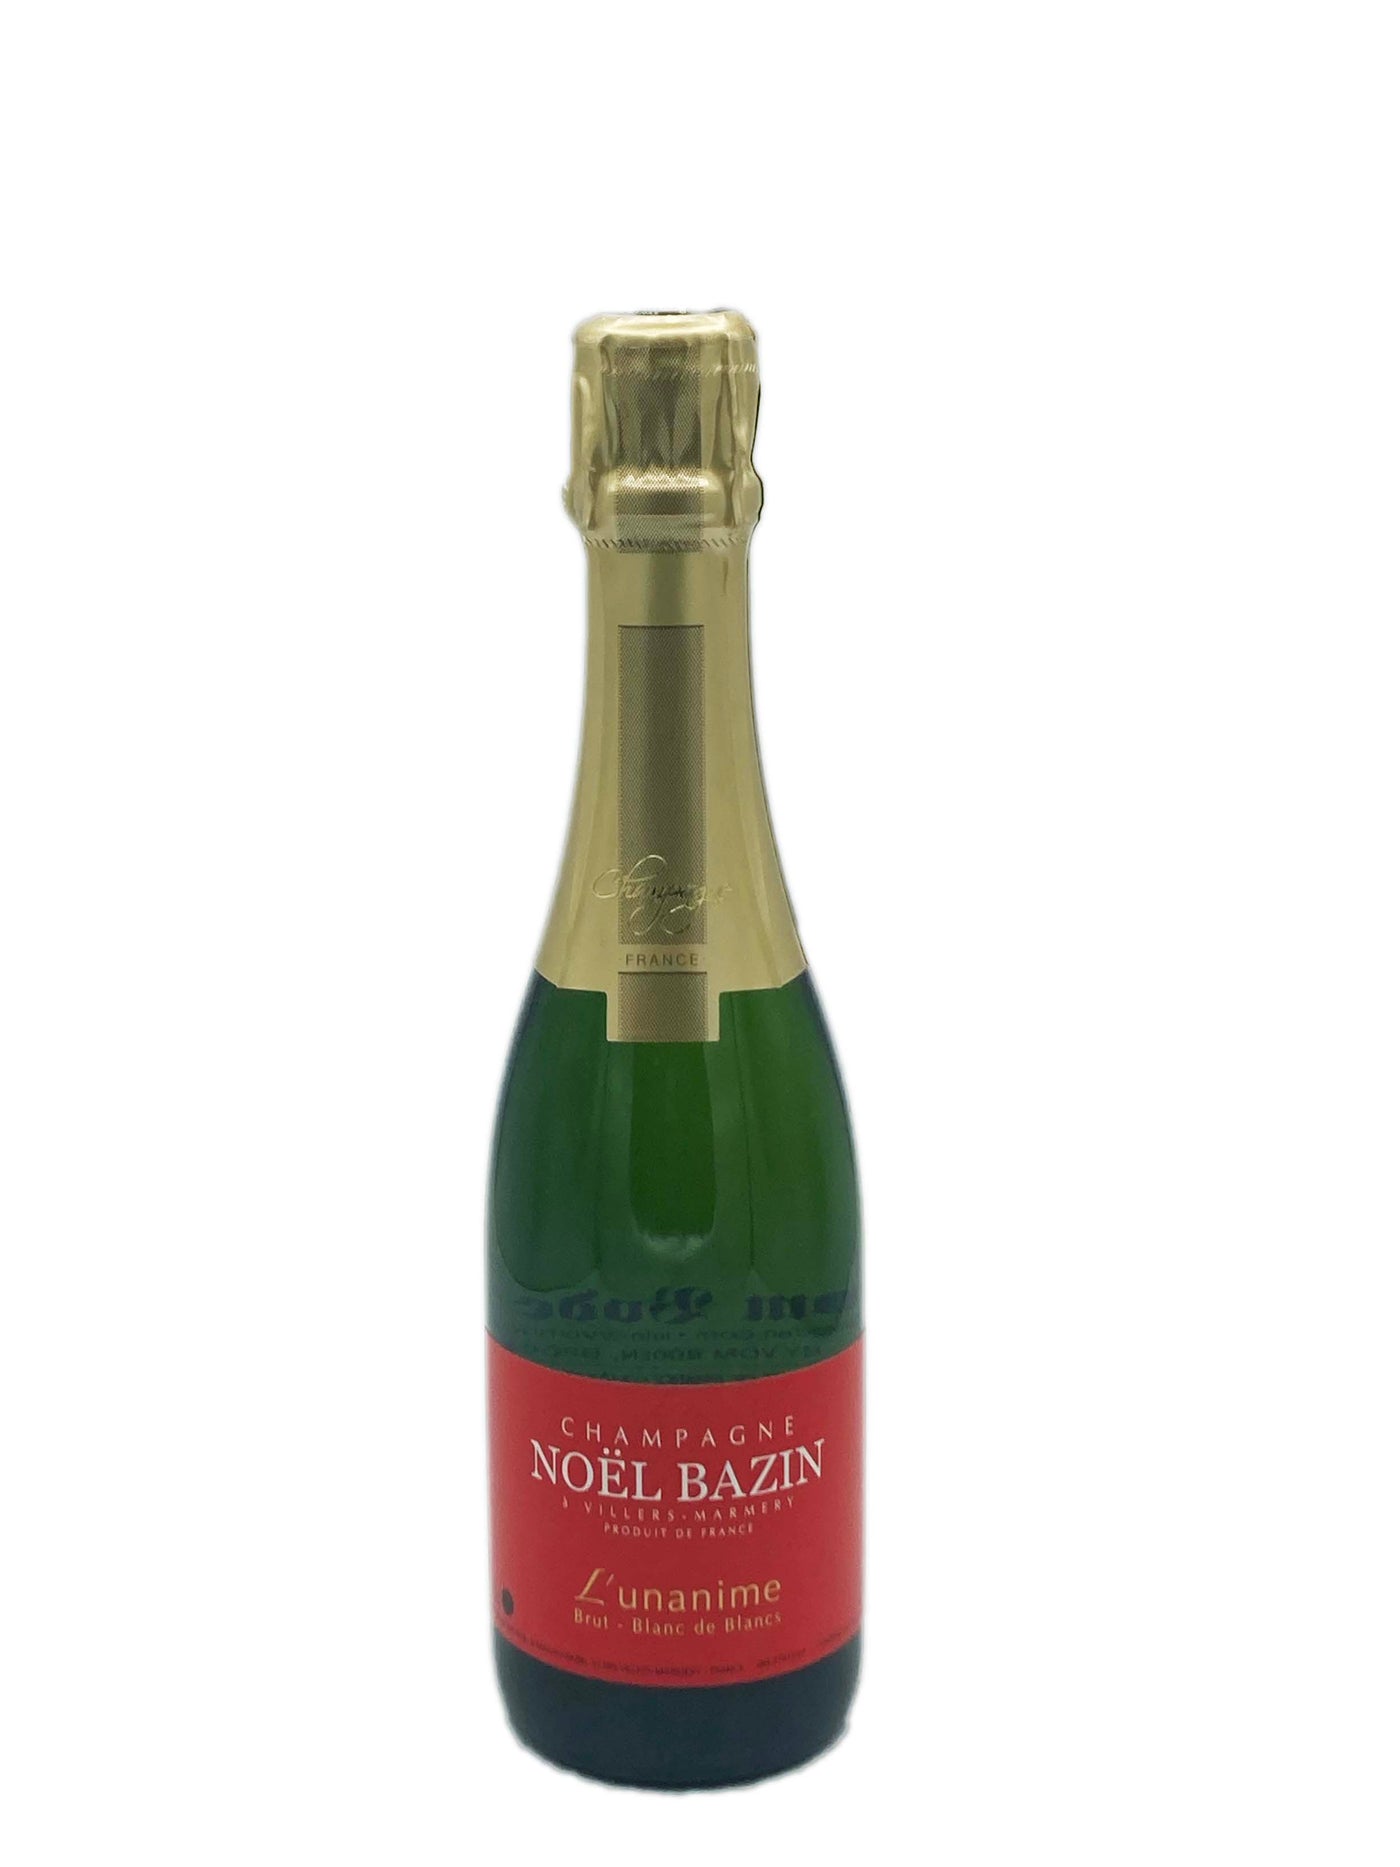 Champagne Noel Bazin L'unanime Brut Blanc de Blancs NV 375ml